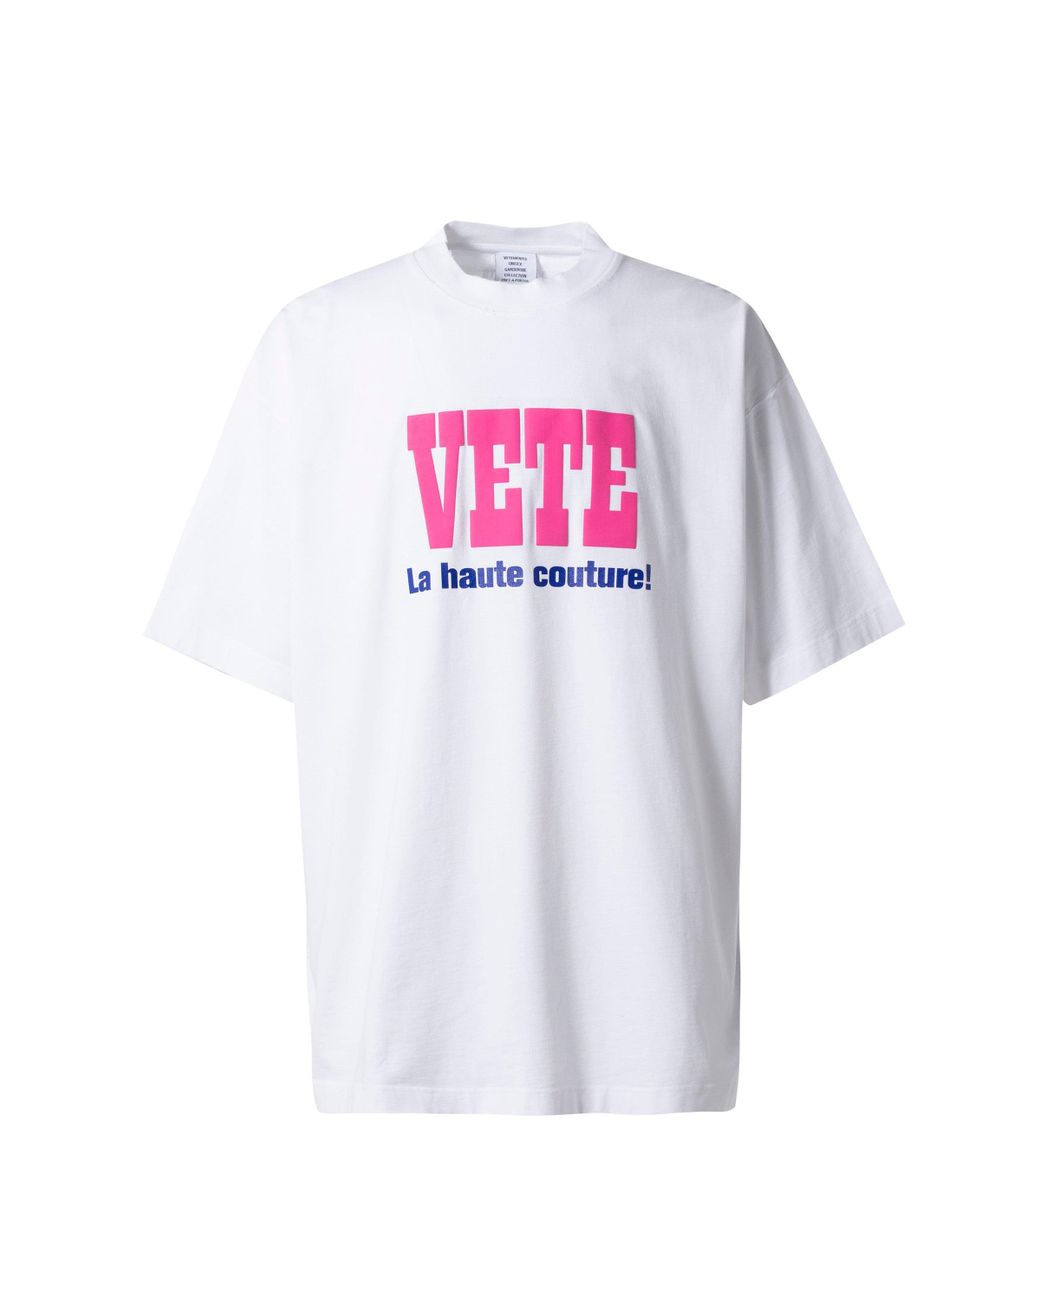 Vetements La Haute Couture T-shirt in White for Men | Lyst